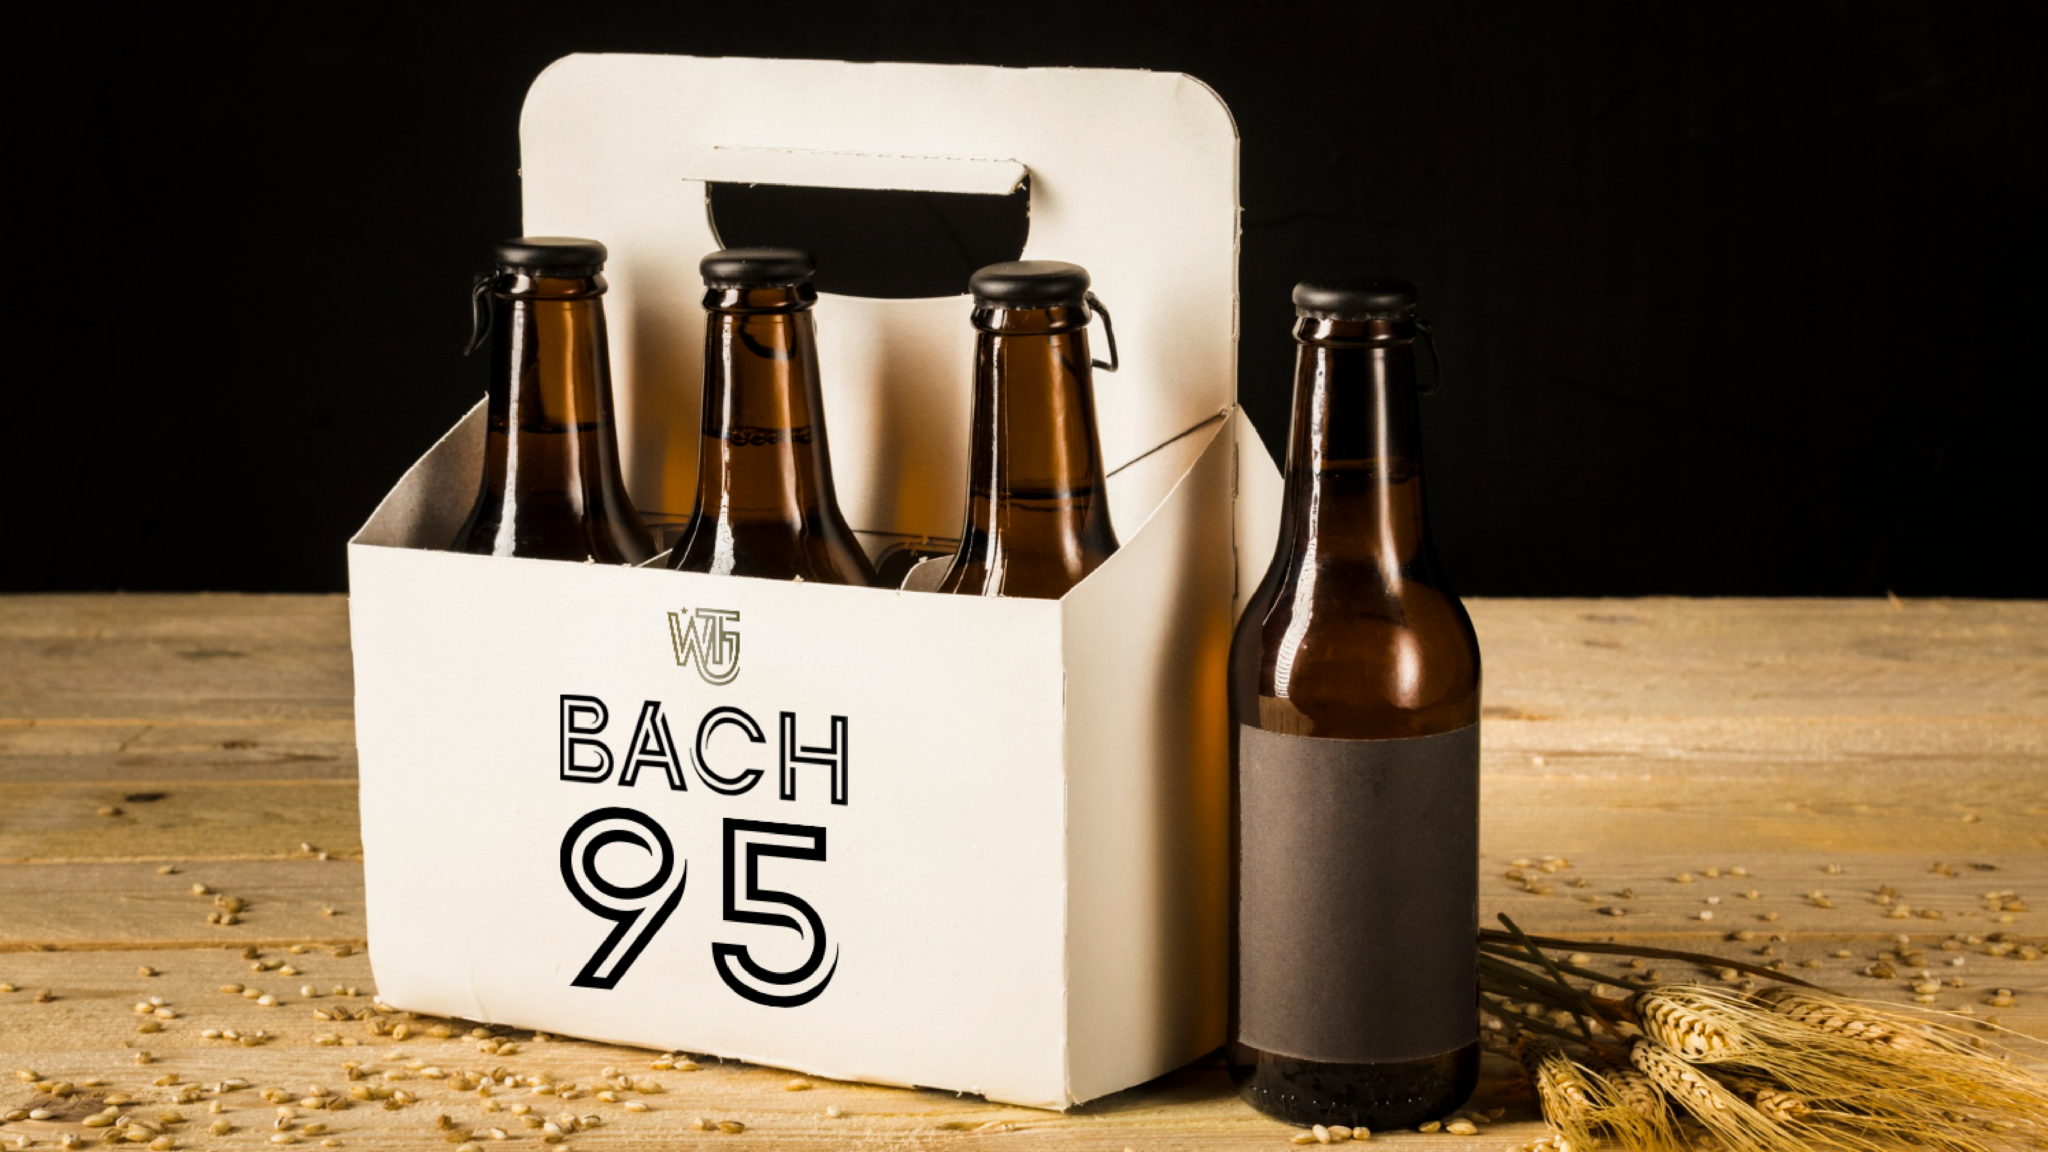 Bach 95 Branding – All Media